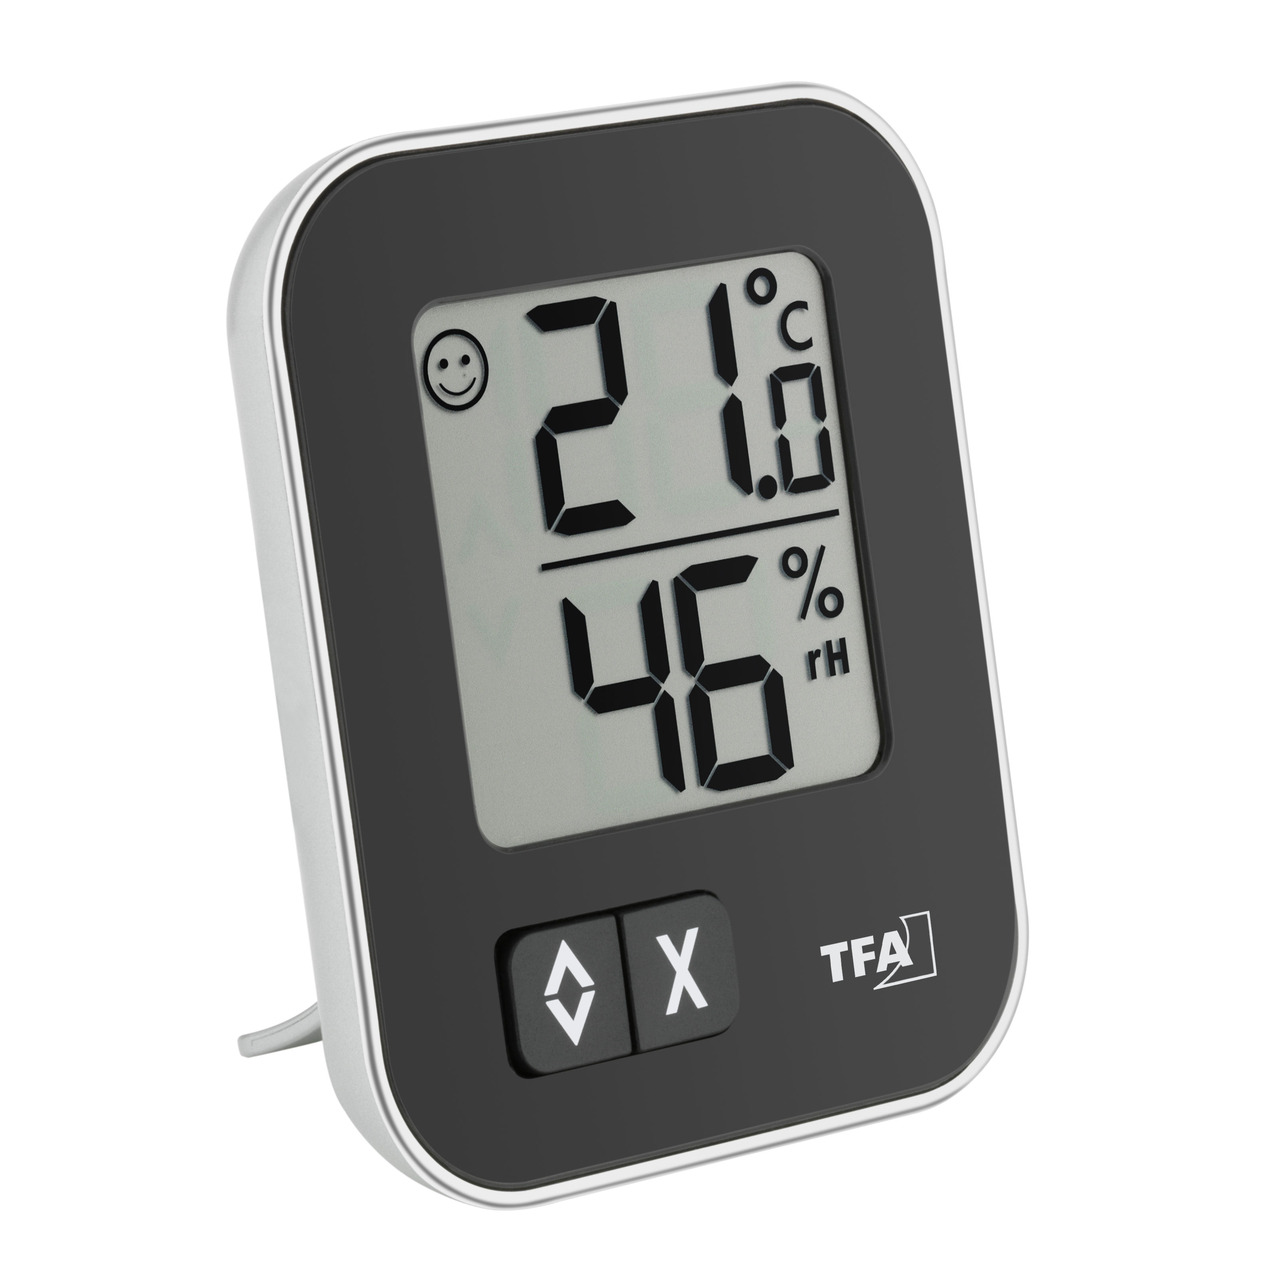 TFA digitales Thermo-Hygrometer MOXX unter Klima - Wetter - Umwelt